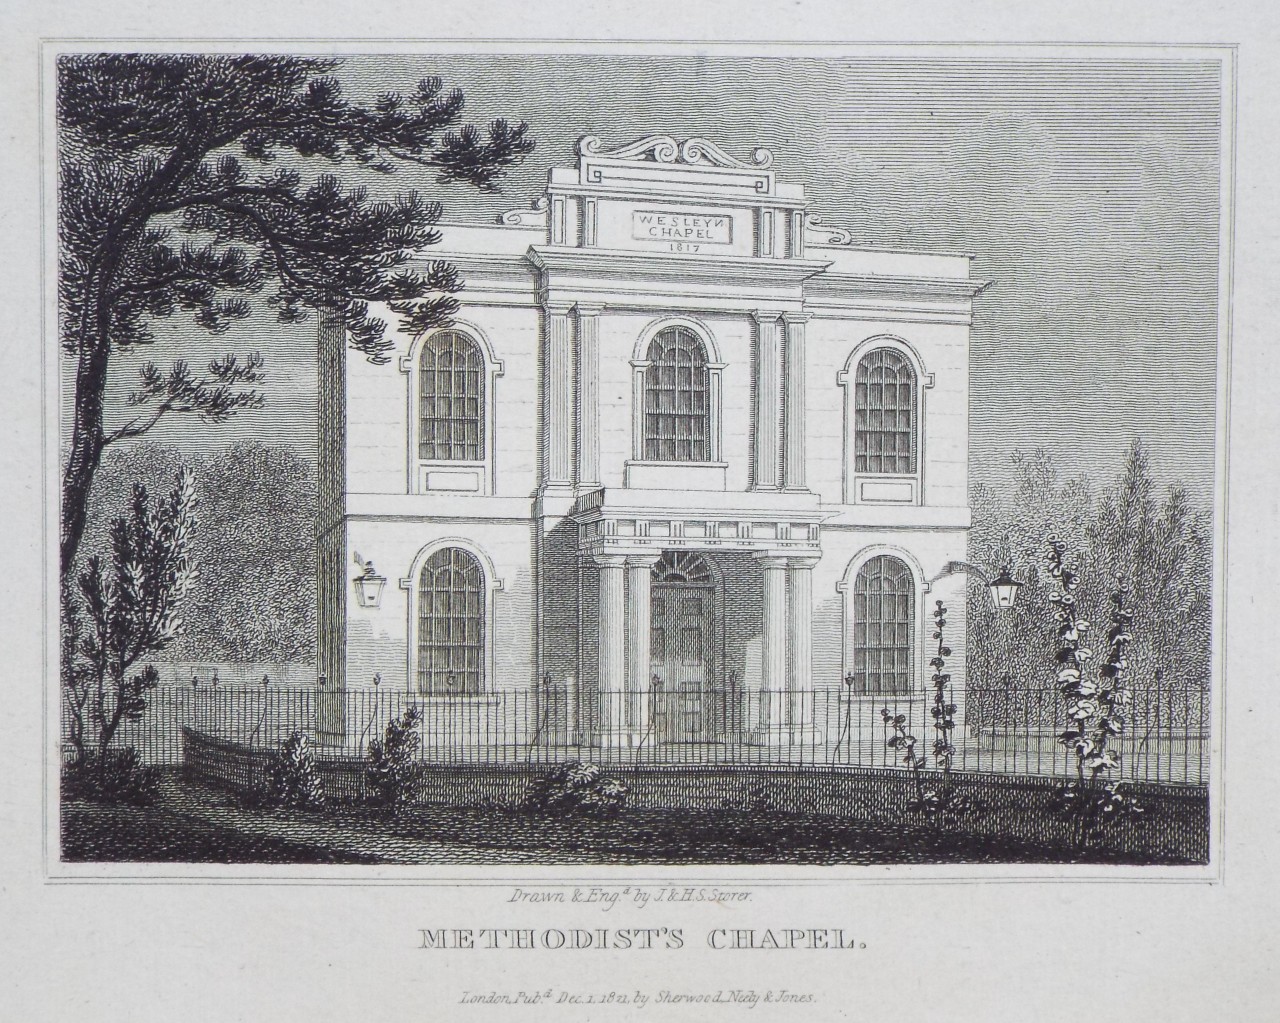 Print - Methodist's Chapel. - Storer